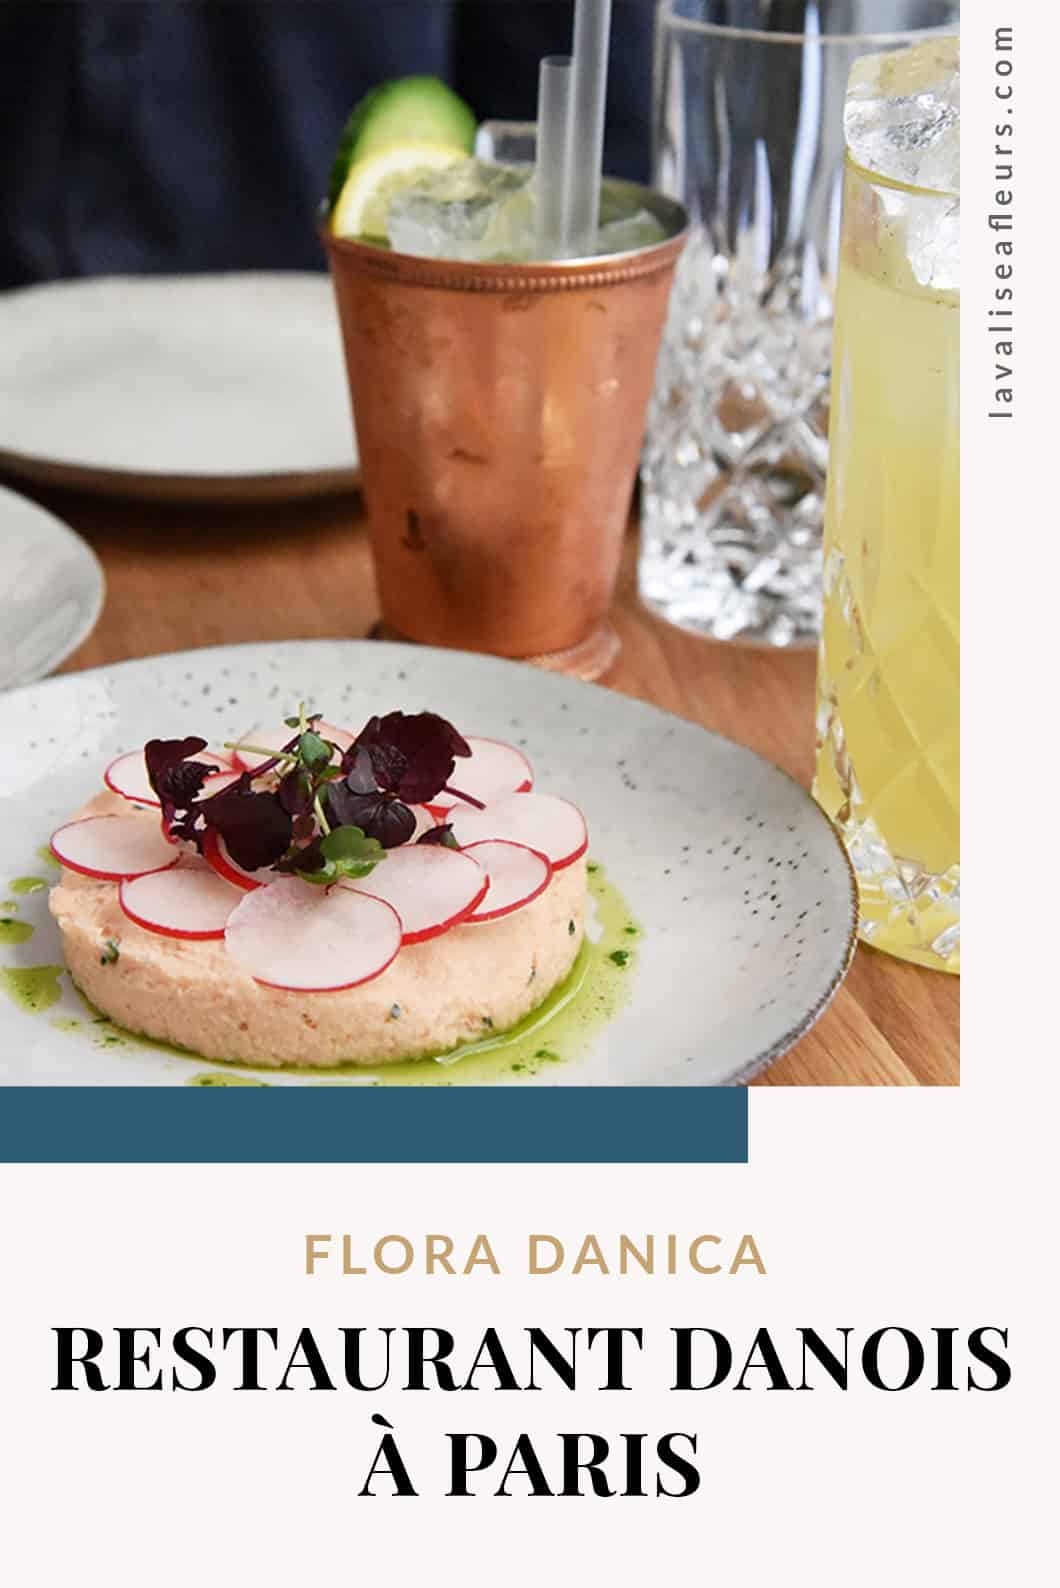 Flora Danica, restaurant danois à Paris